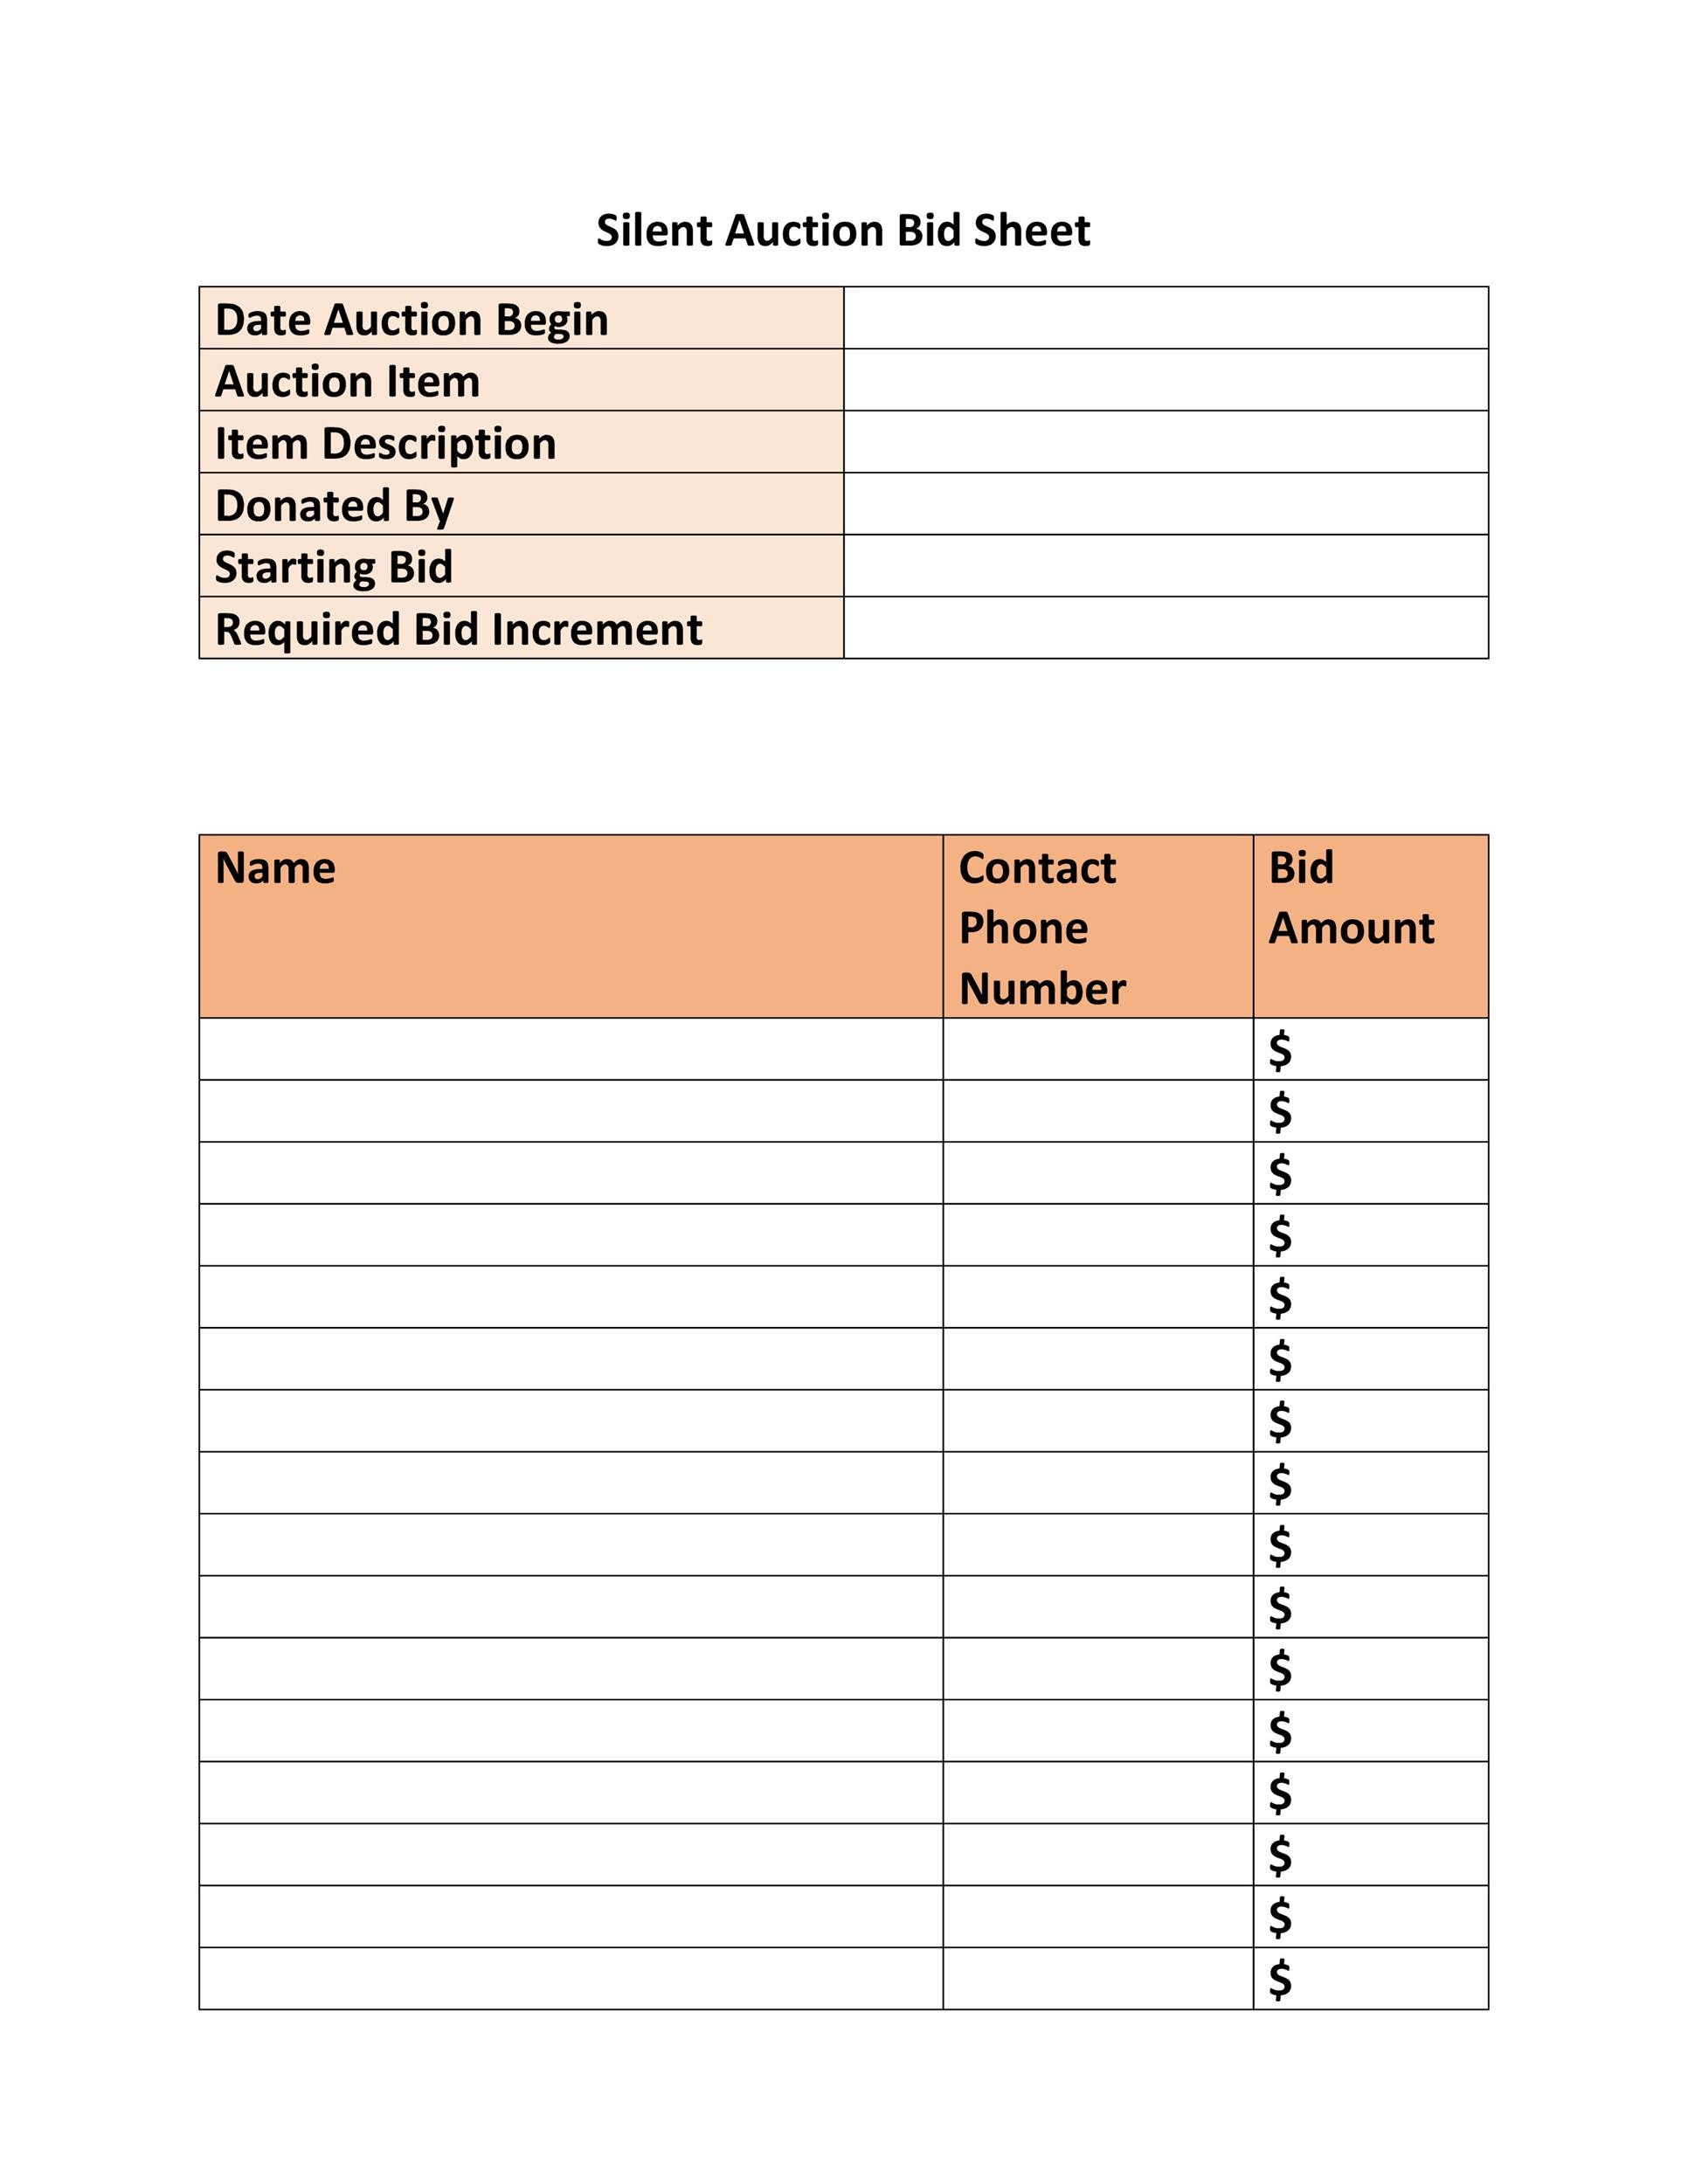 40-silent-auction-bid-sheet-templates-word-excel-templatelab